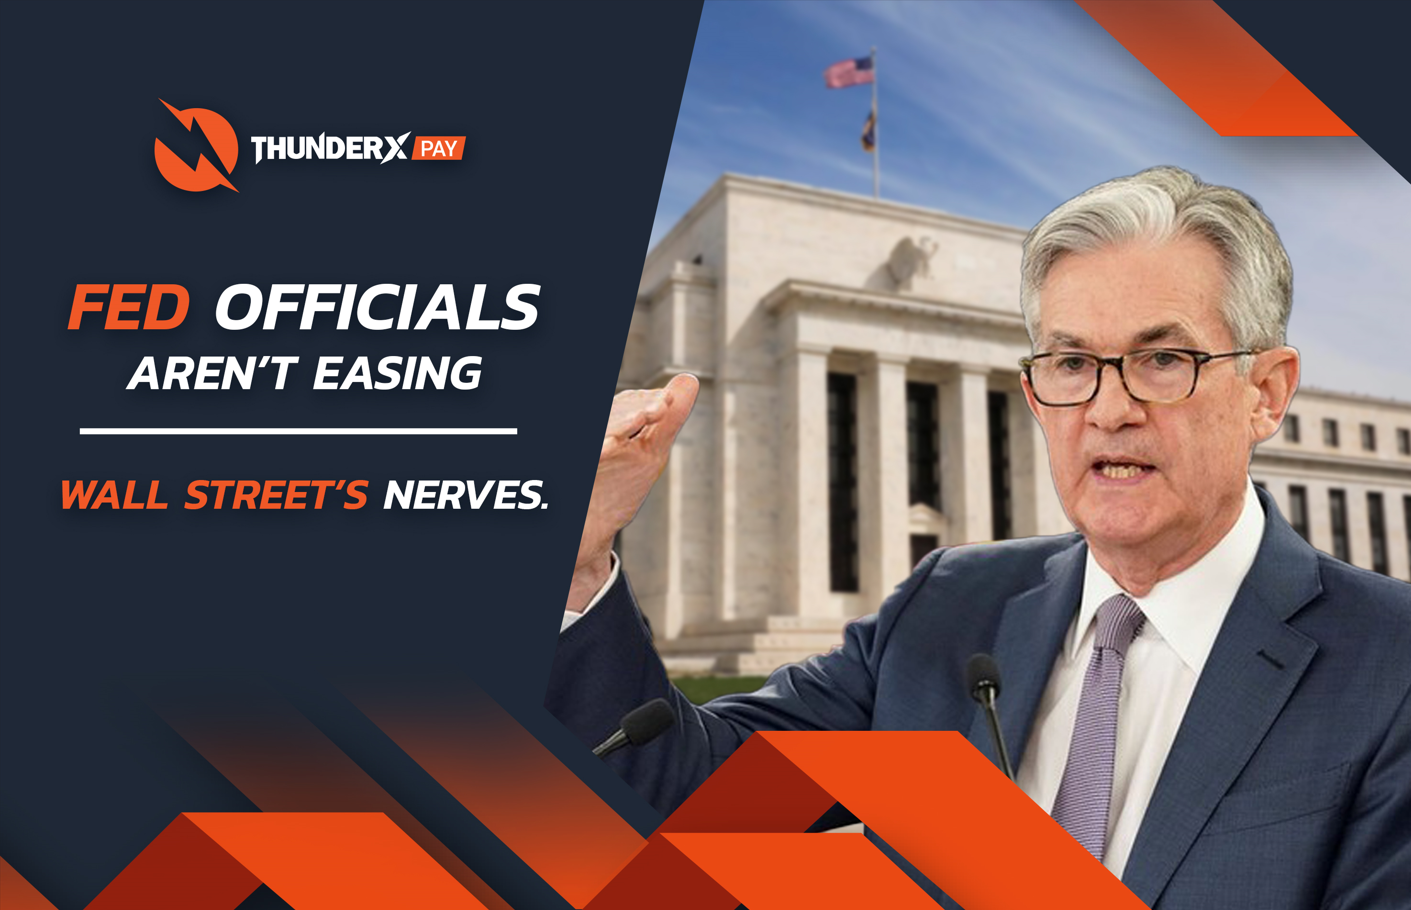 Fed officials aren’t easing Wall Street’s nerves.